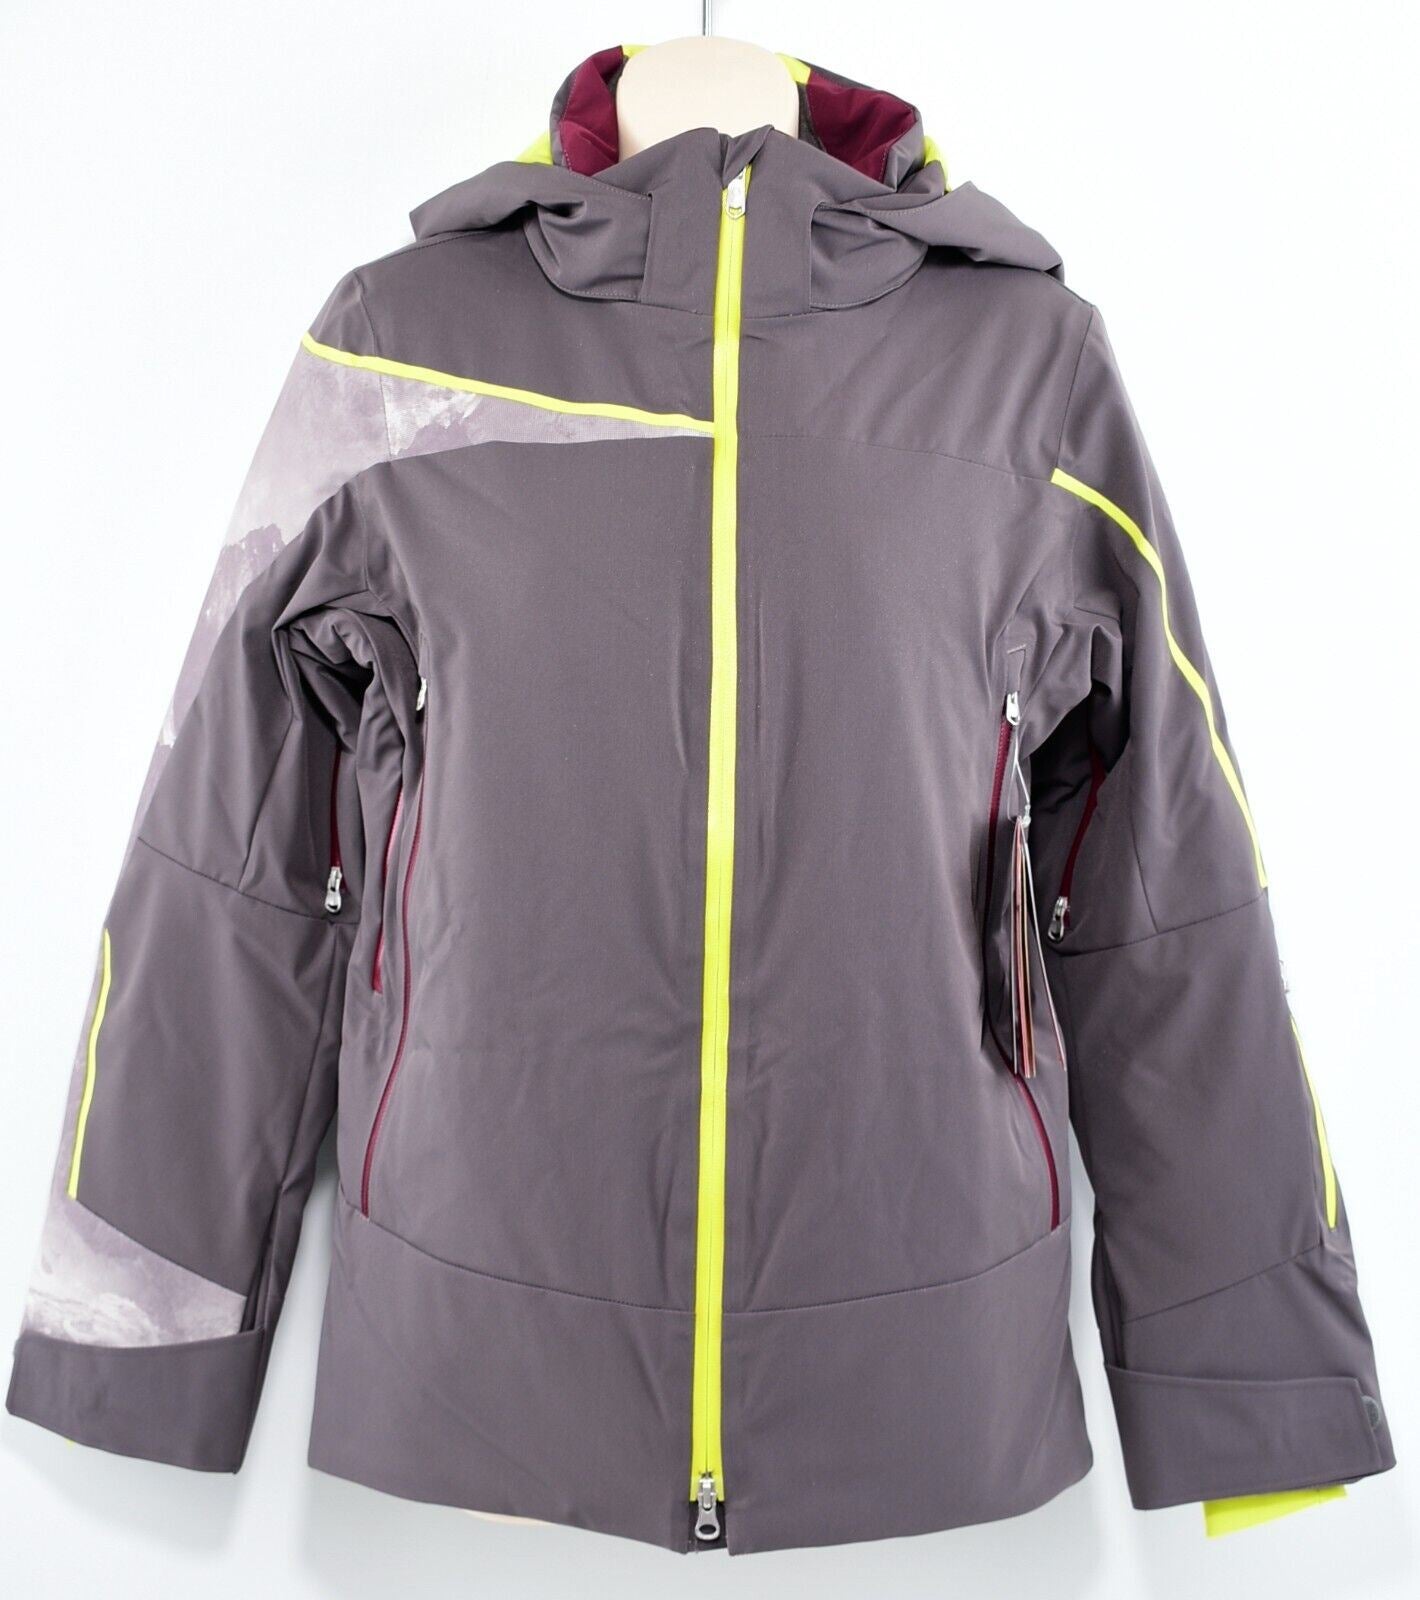 SPYDER Womens EMPRESS Ski Jacket, Grey/Multicoloured, size UK 6